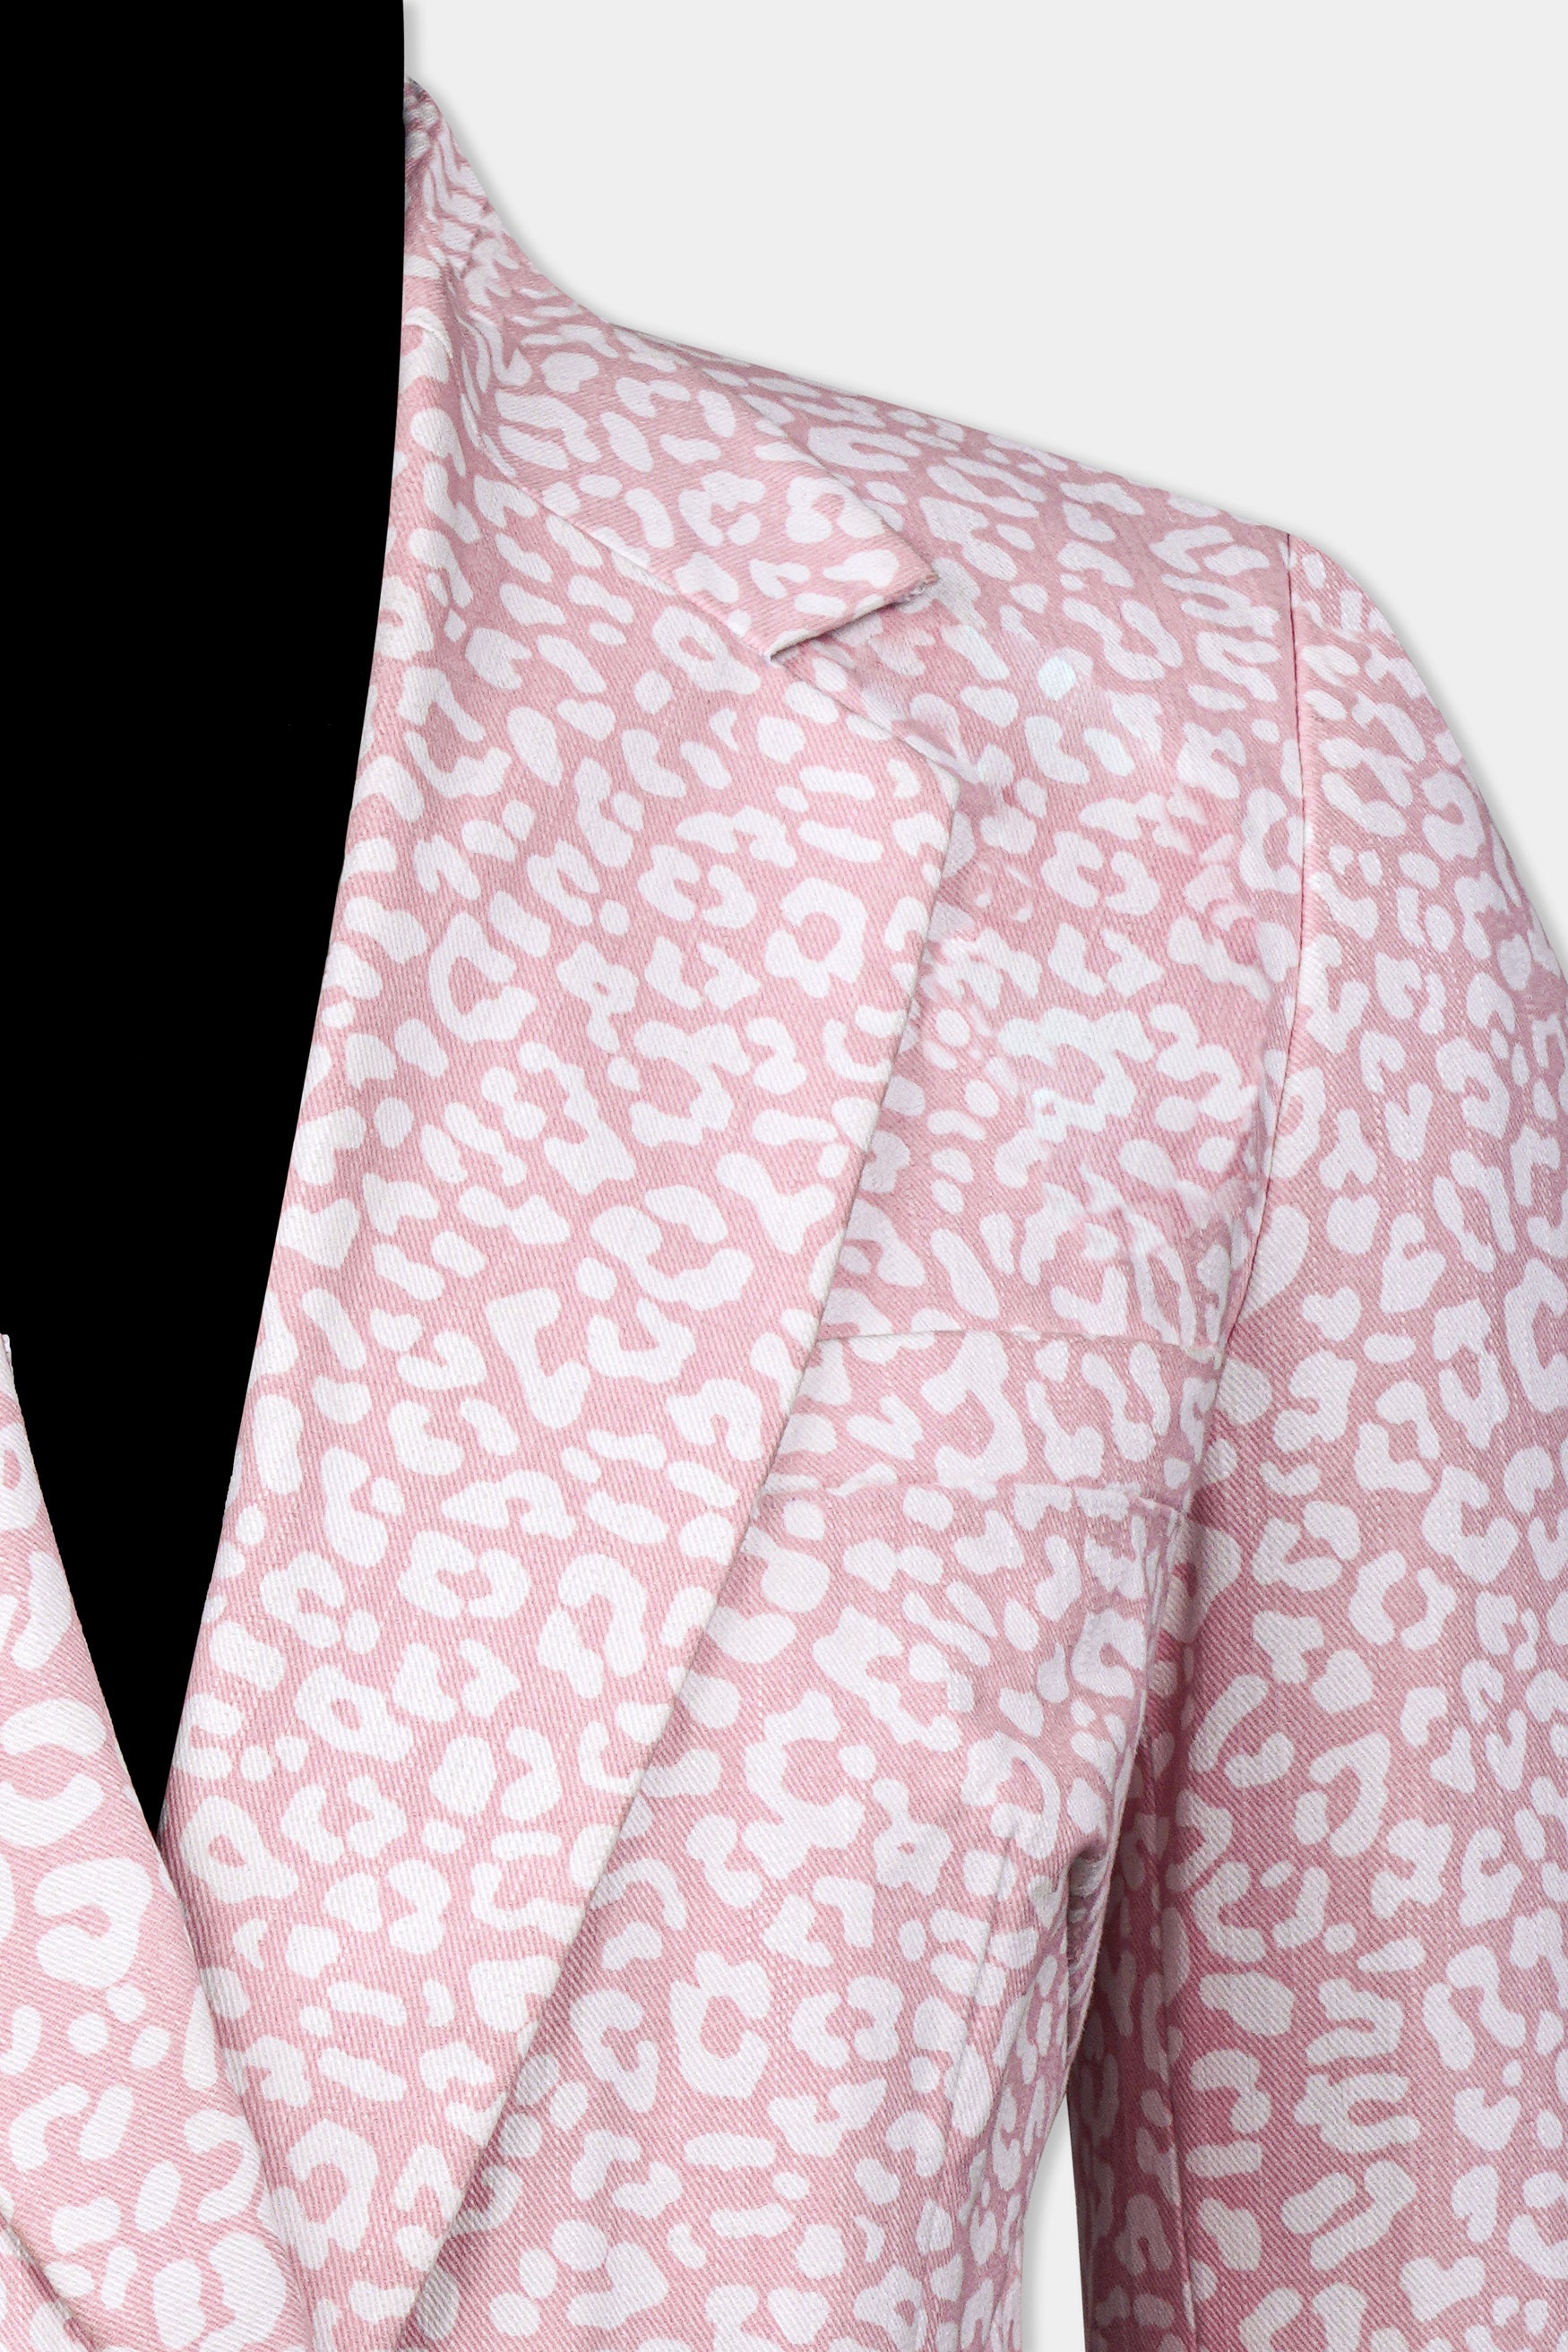 Thistle Pink and Bright White Animal Printed Premium Cotton Women’s Designer Suit